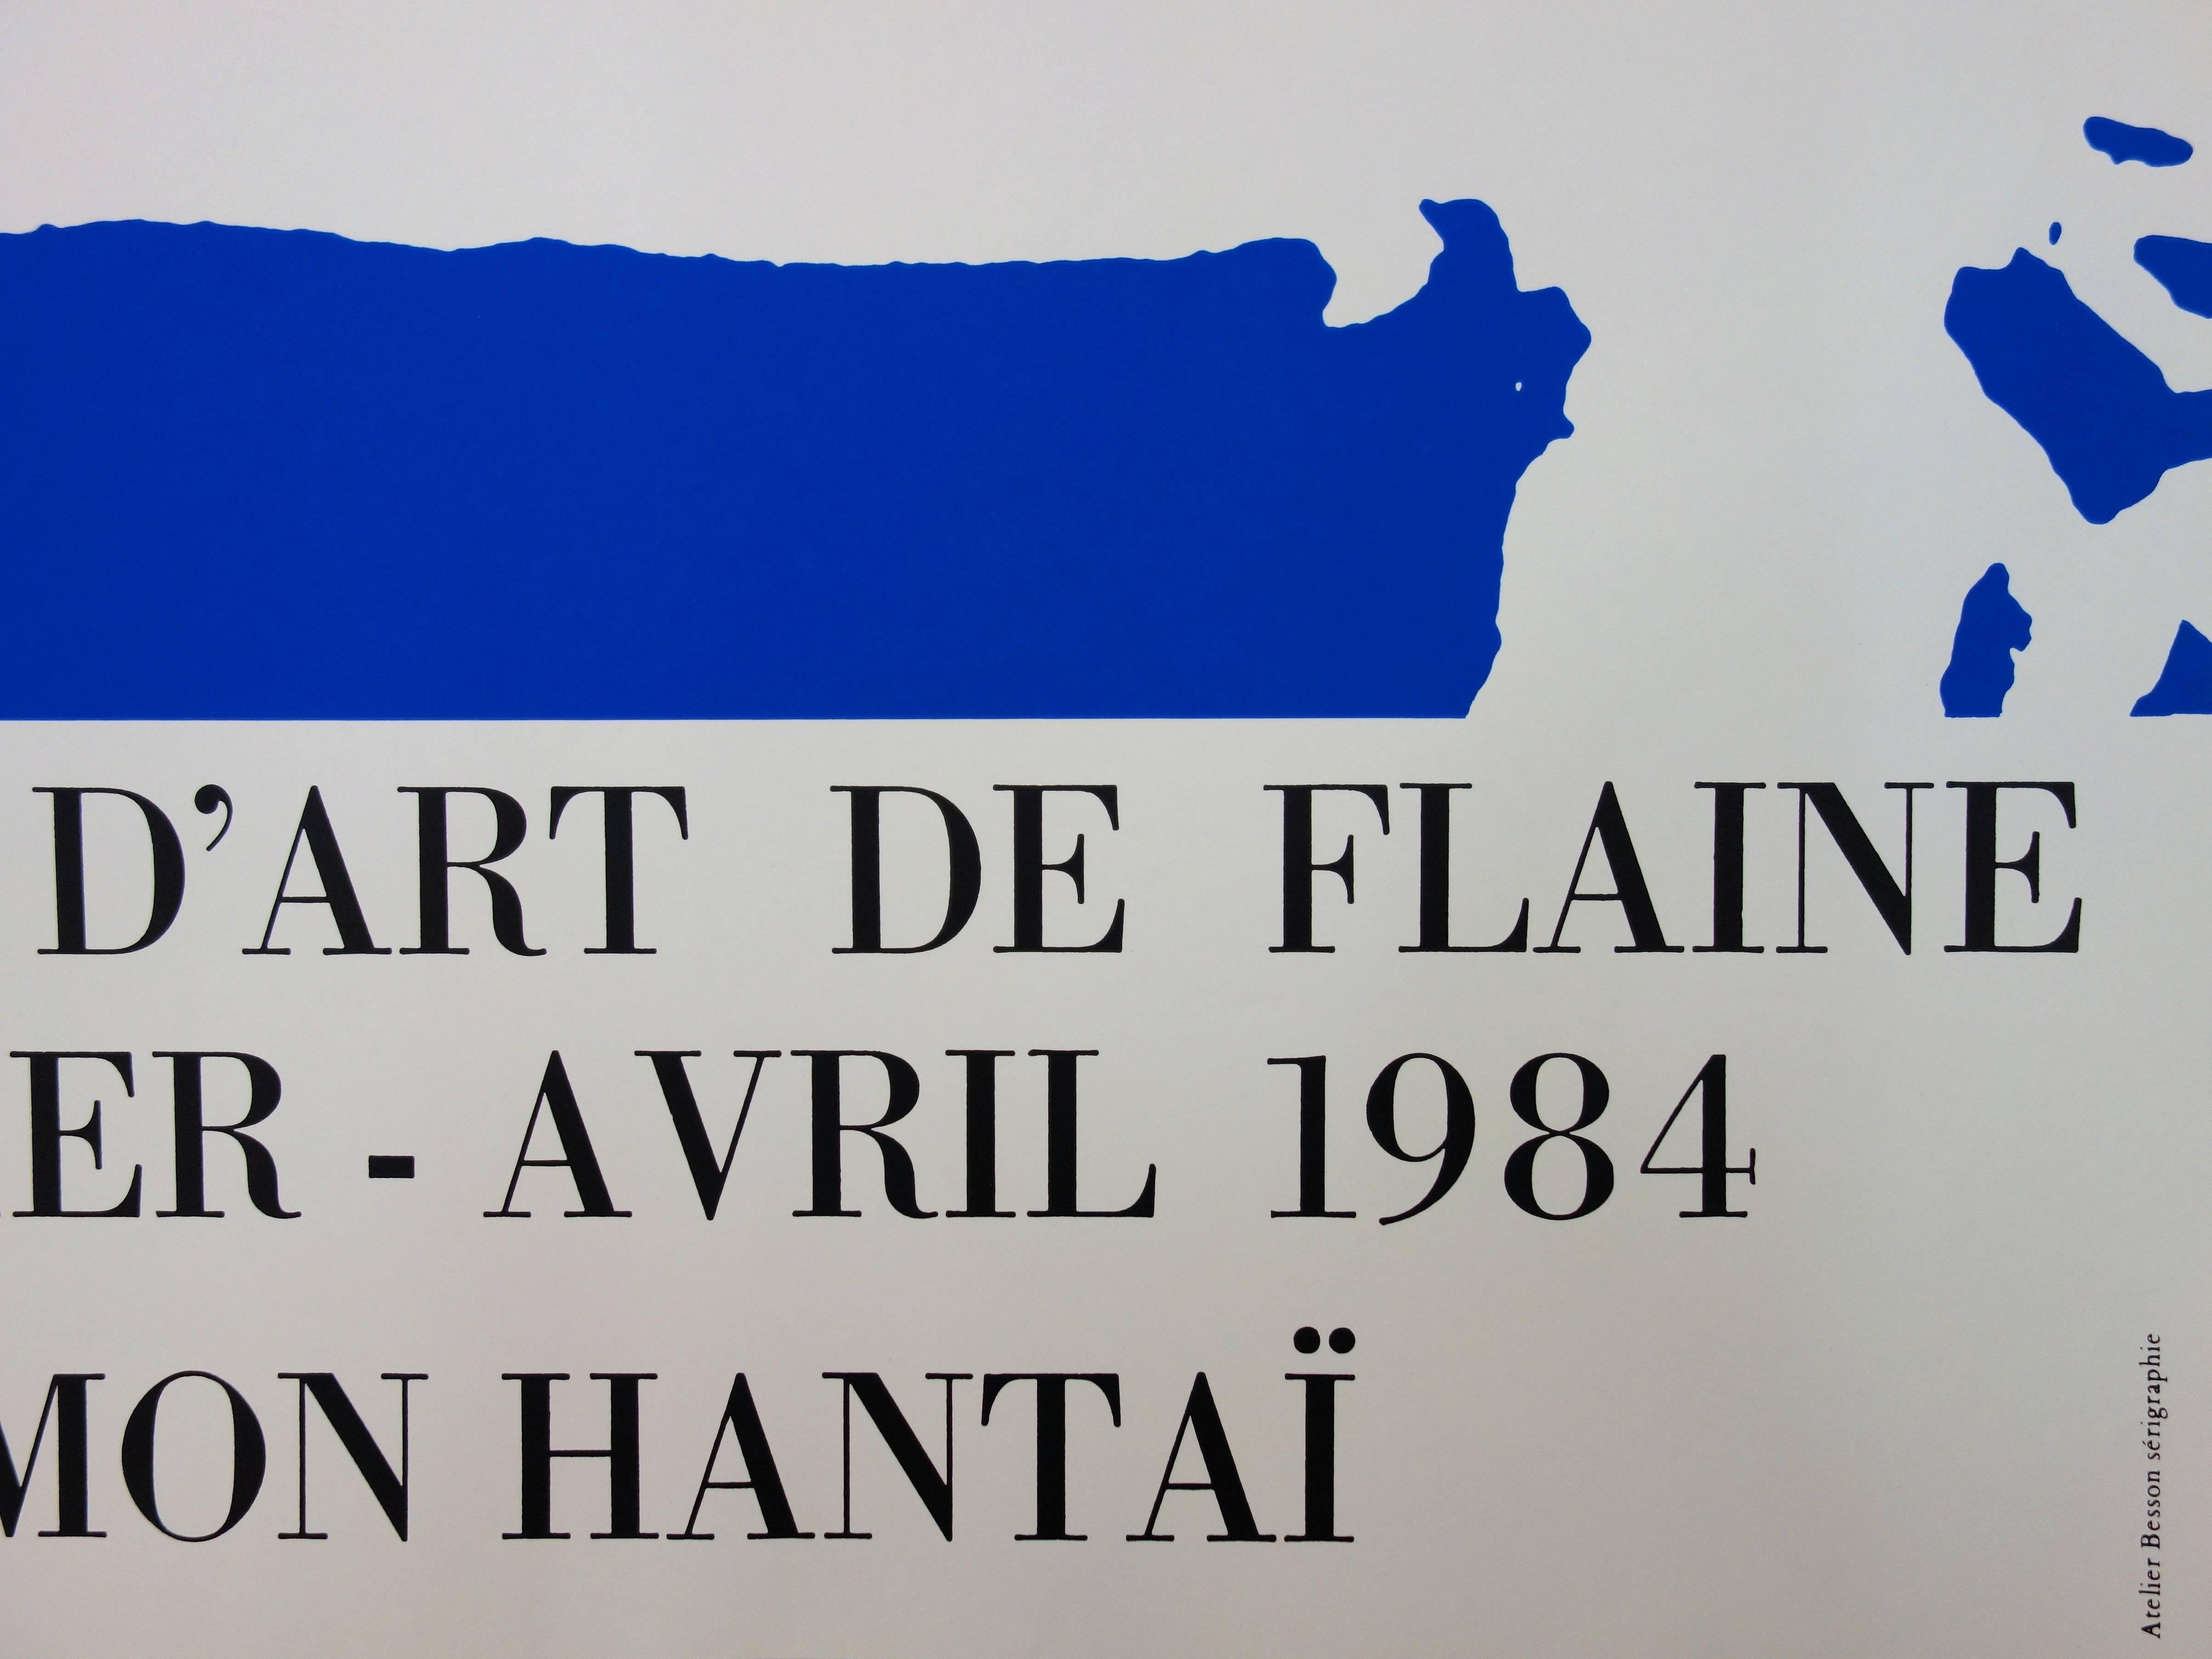 Blue Tabula - Serigraph (Centre Flaine 1984) - Abstract Print by Simon Hantaï